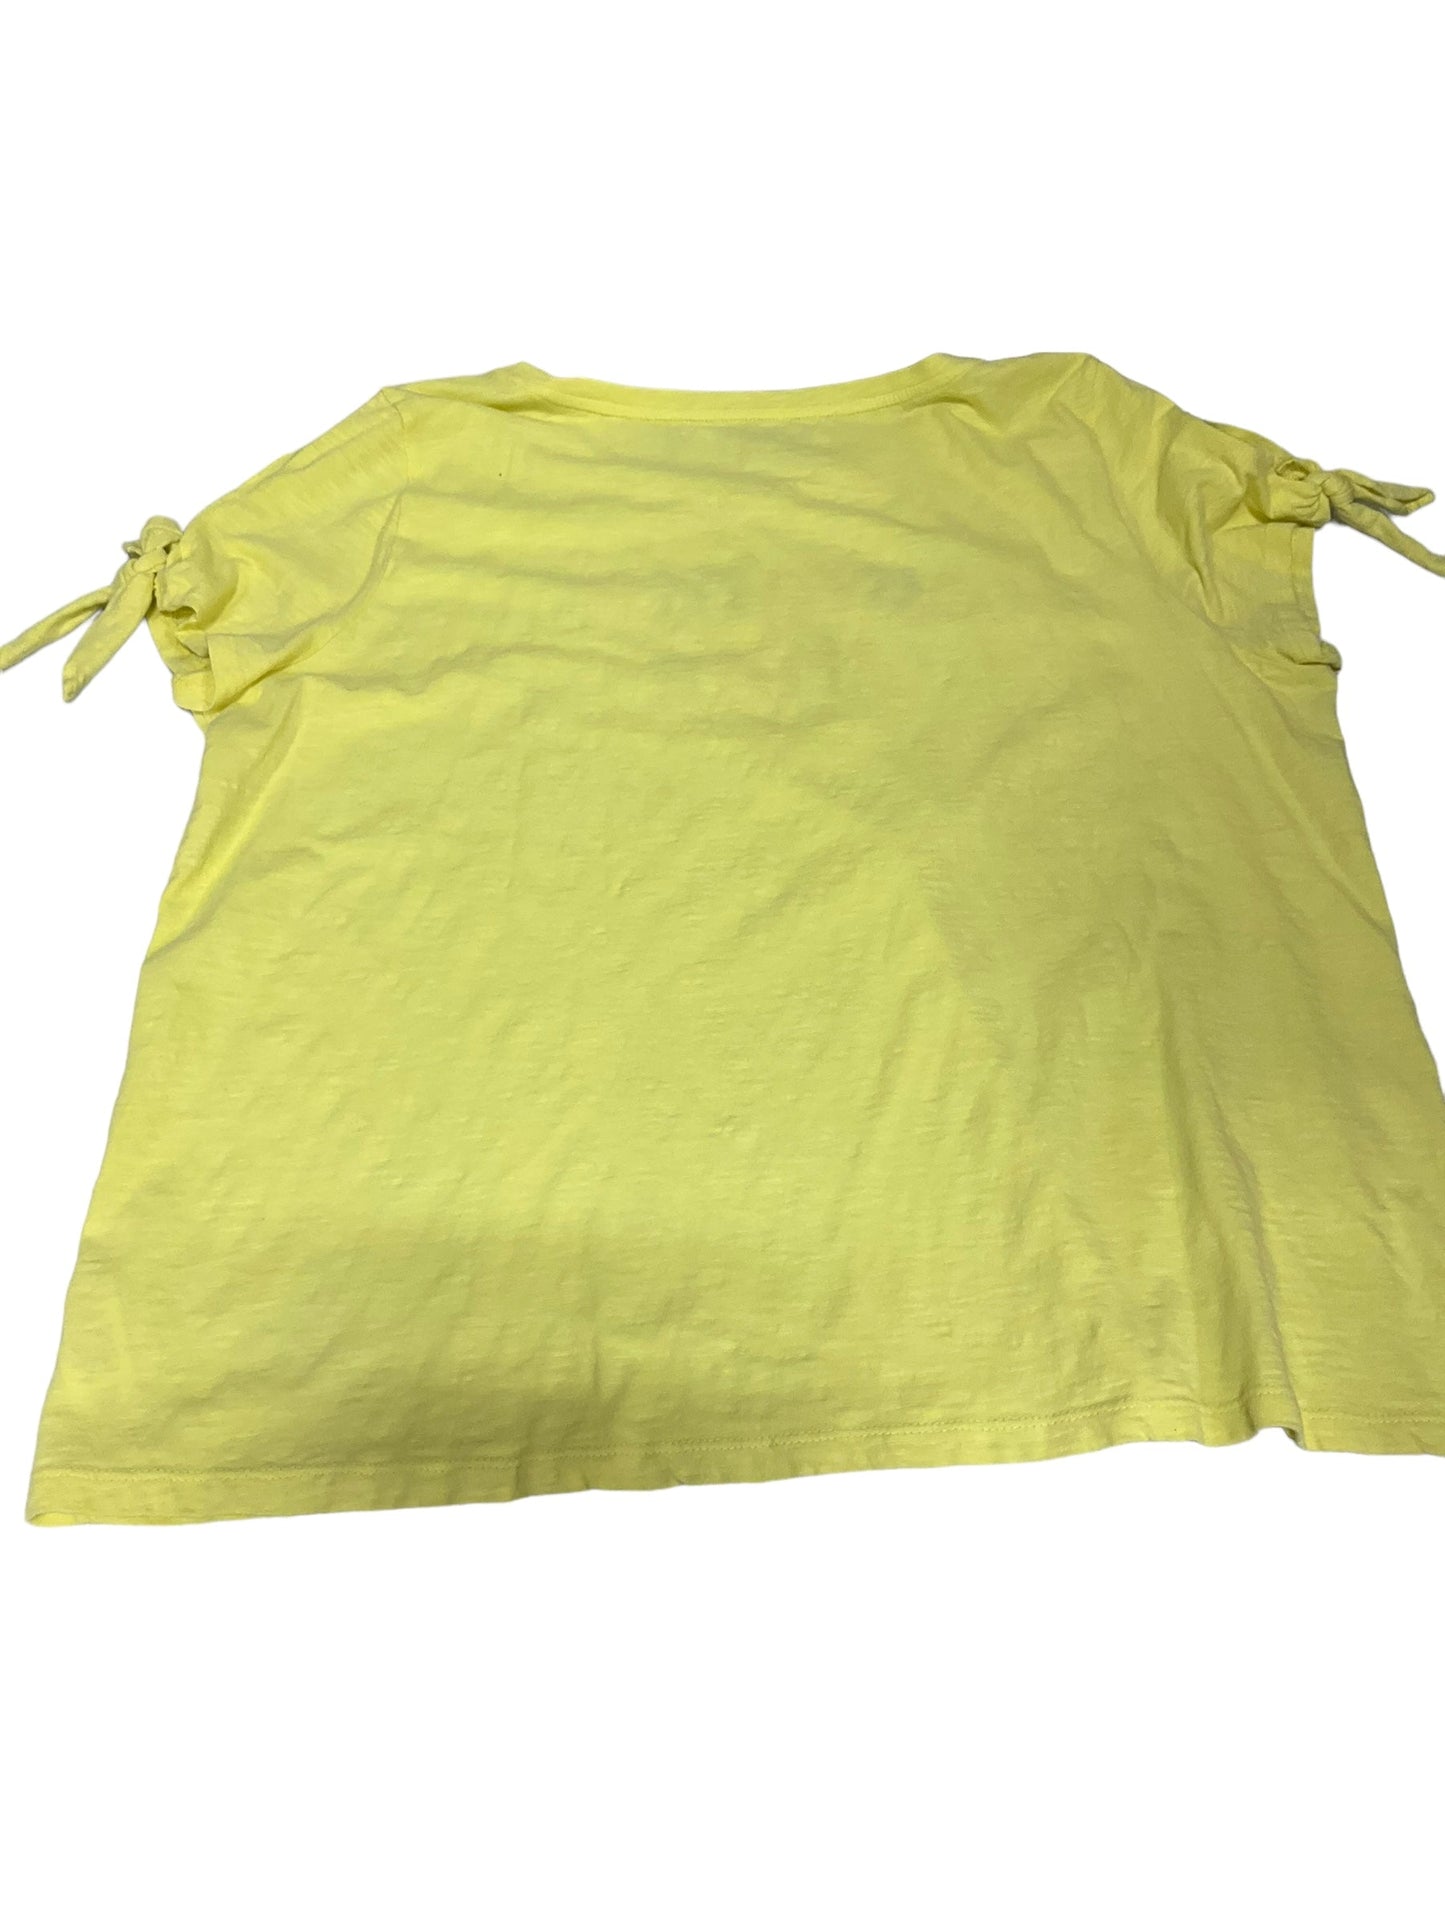 Yellow Top Short Sleeve Basic Talbots, Size 2x